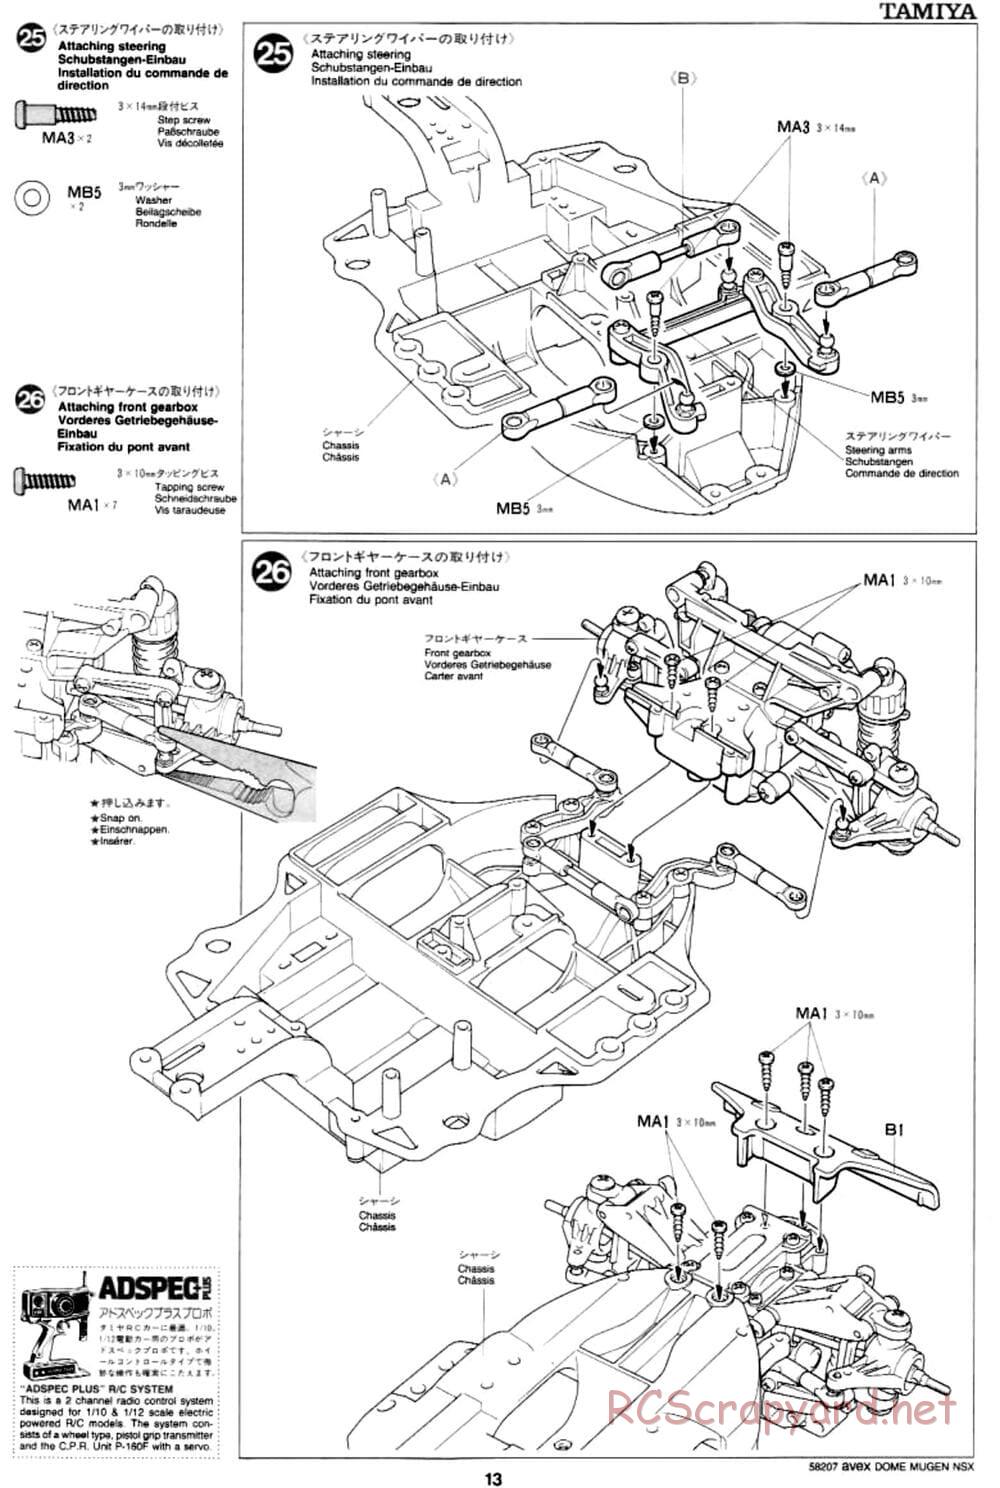 Tamiya - Avex Dome Mugen NSX - TA-03R Chassis - Manual - Page 13